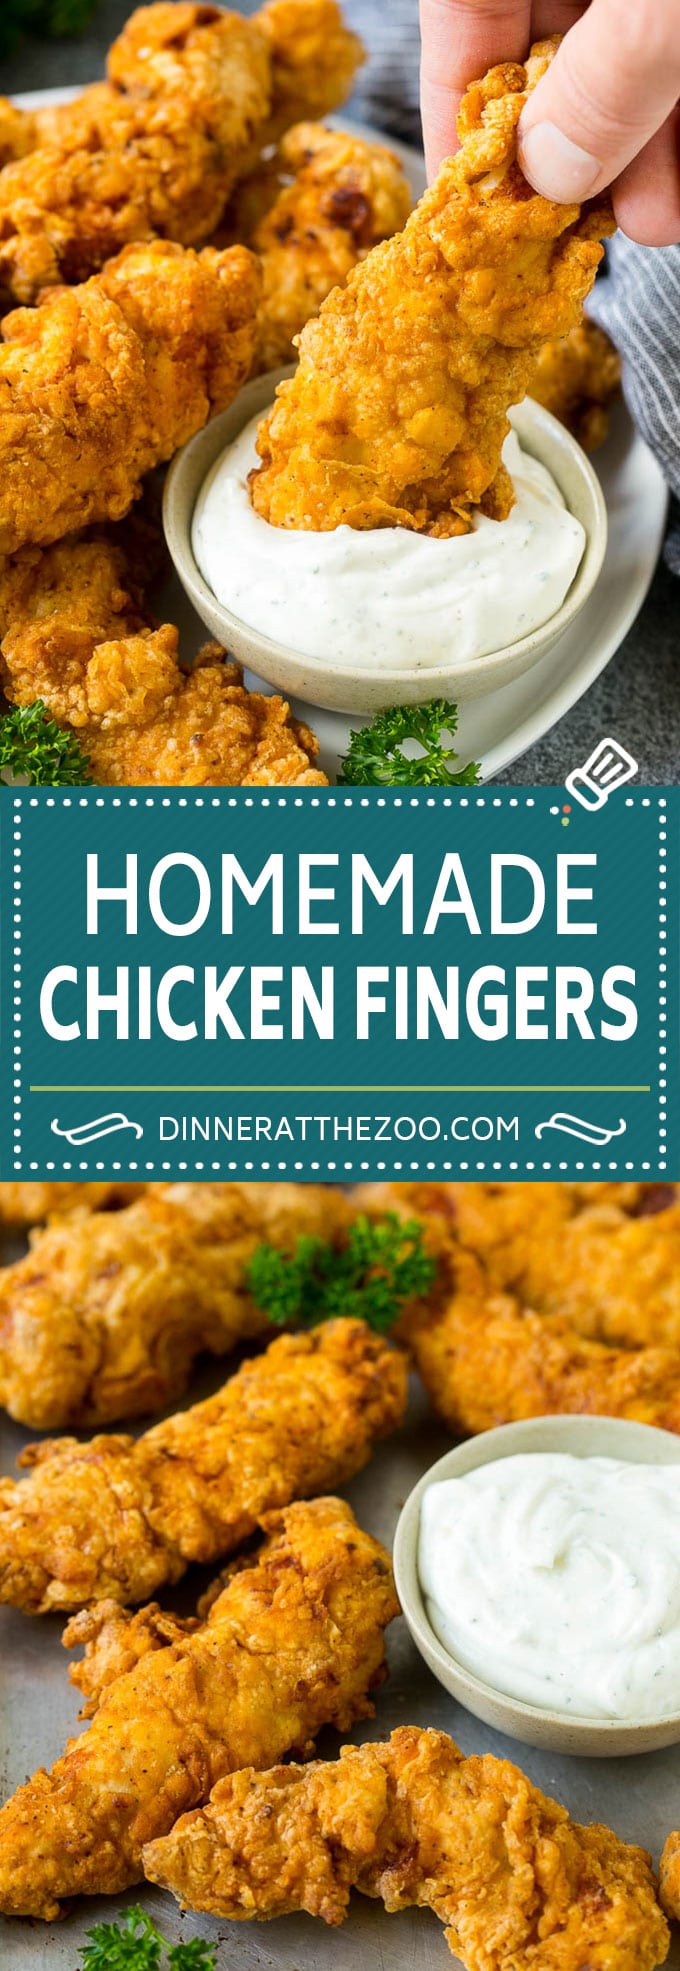 Homemade Chicken Fingers Recipe | Chicken Tenders | Fried Chicken #chicken #friedchicken #dinner #appetizer #dinneratthezoo